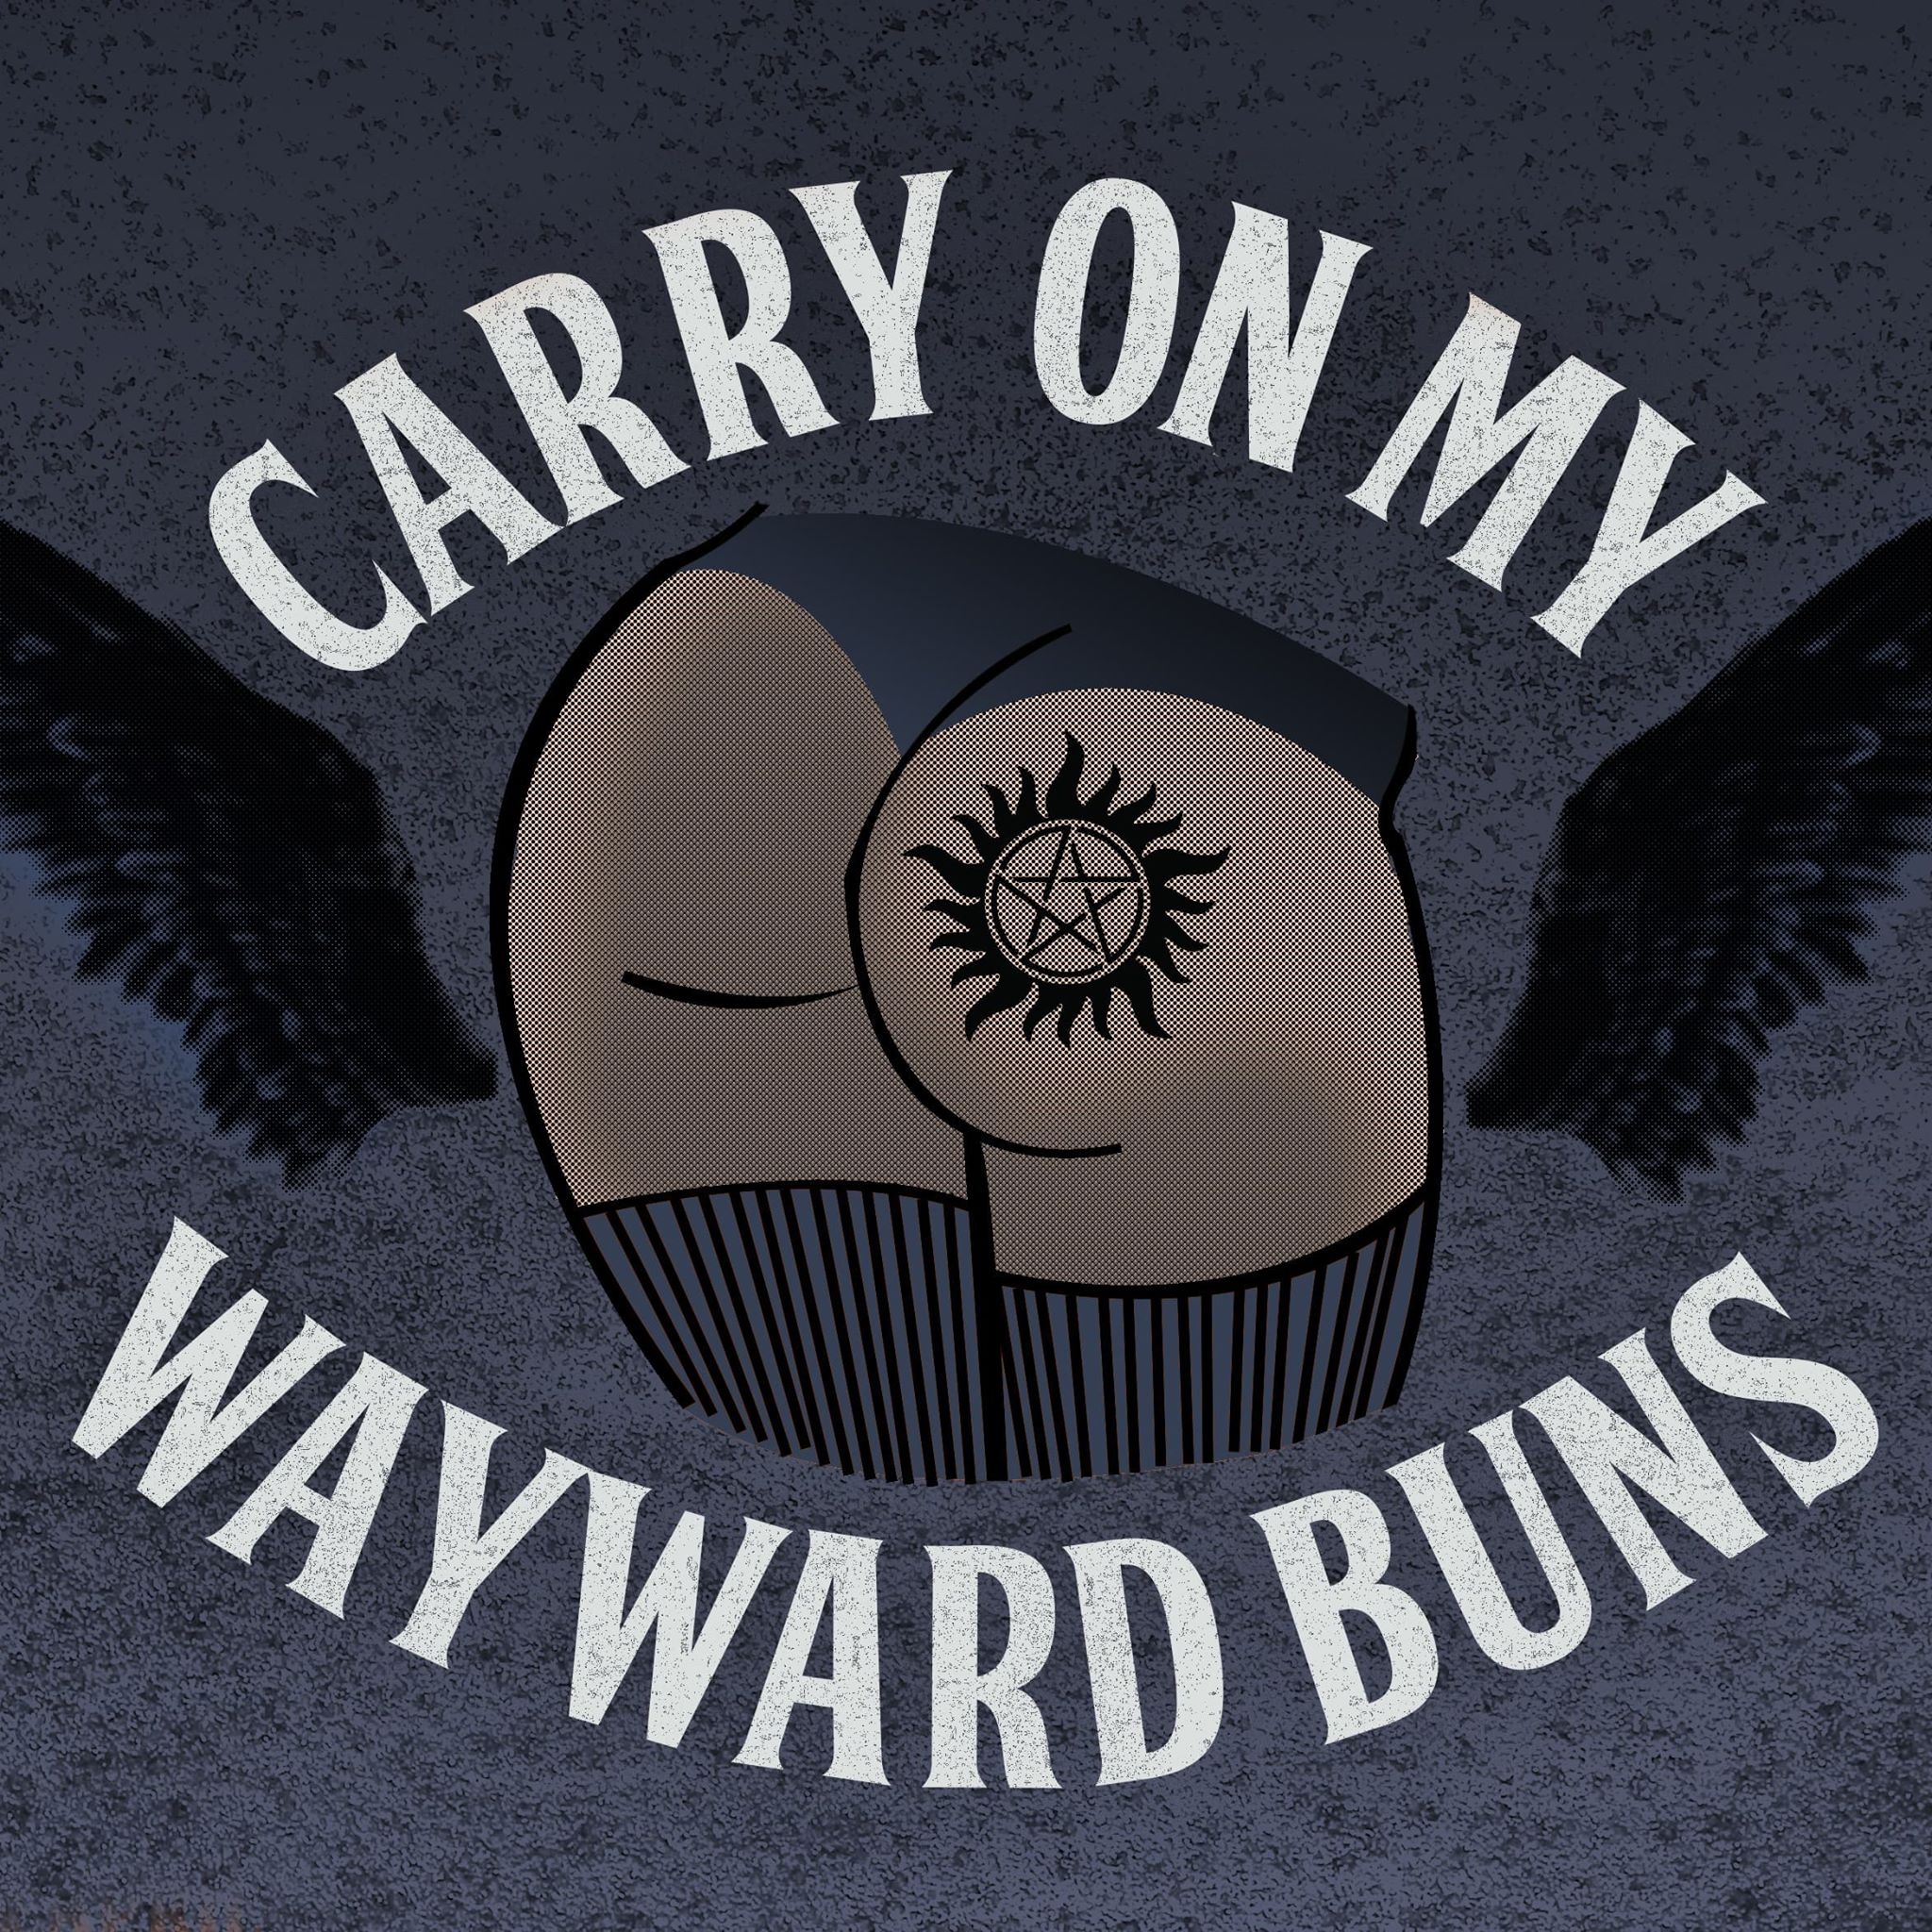 Carry On My Wayward Buns official logo